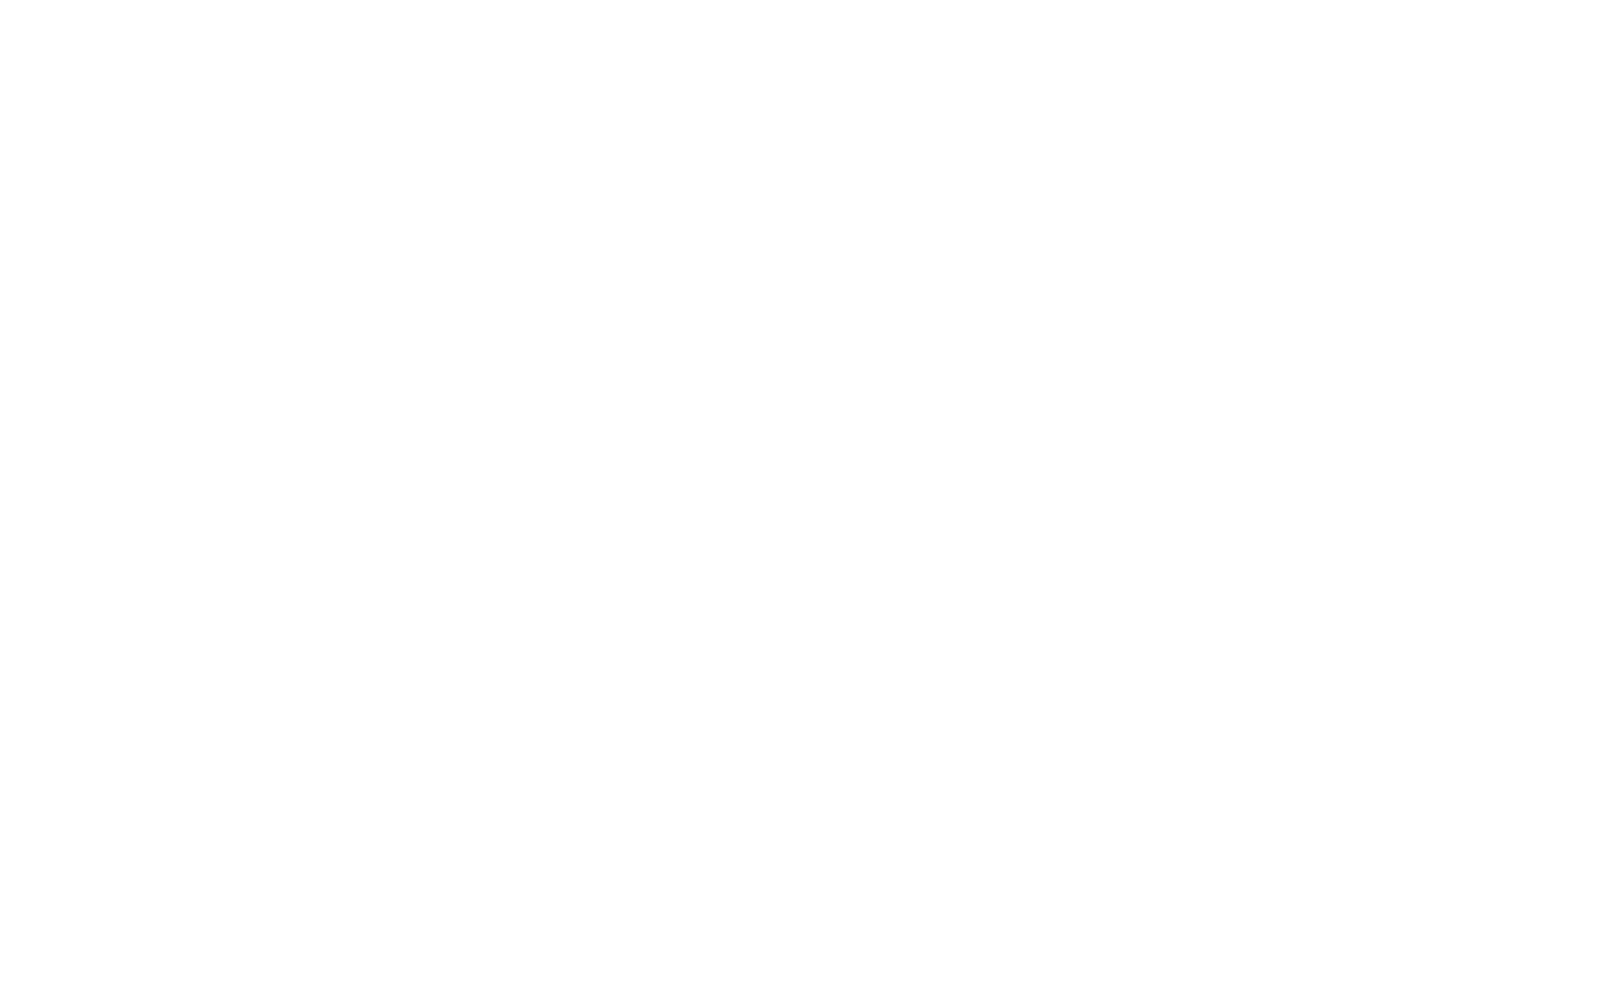 Fishing Town